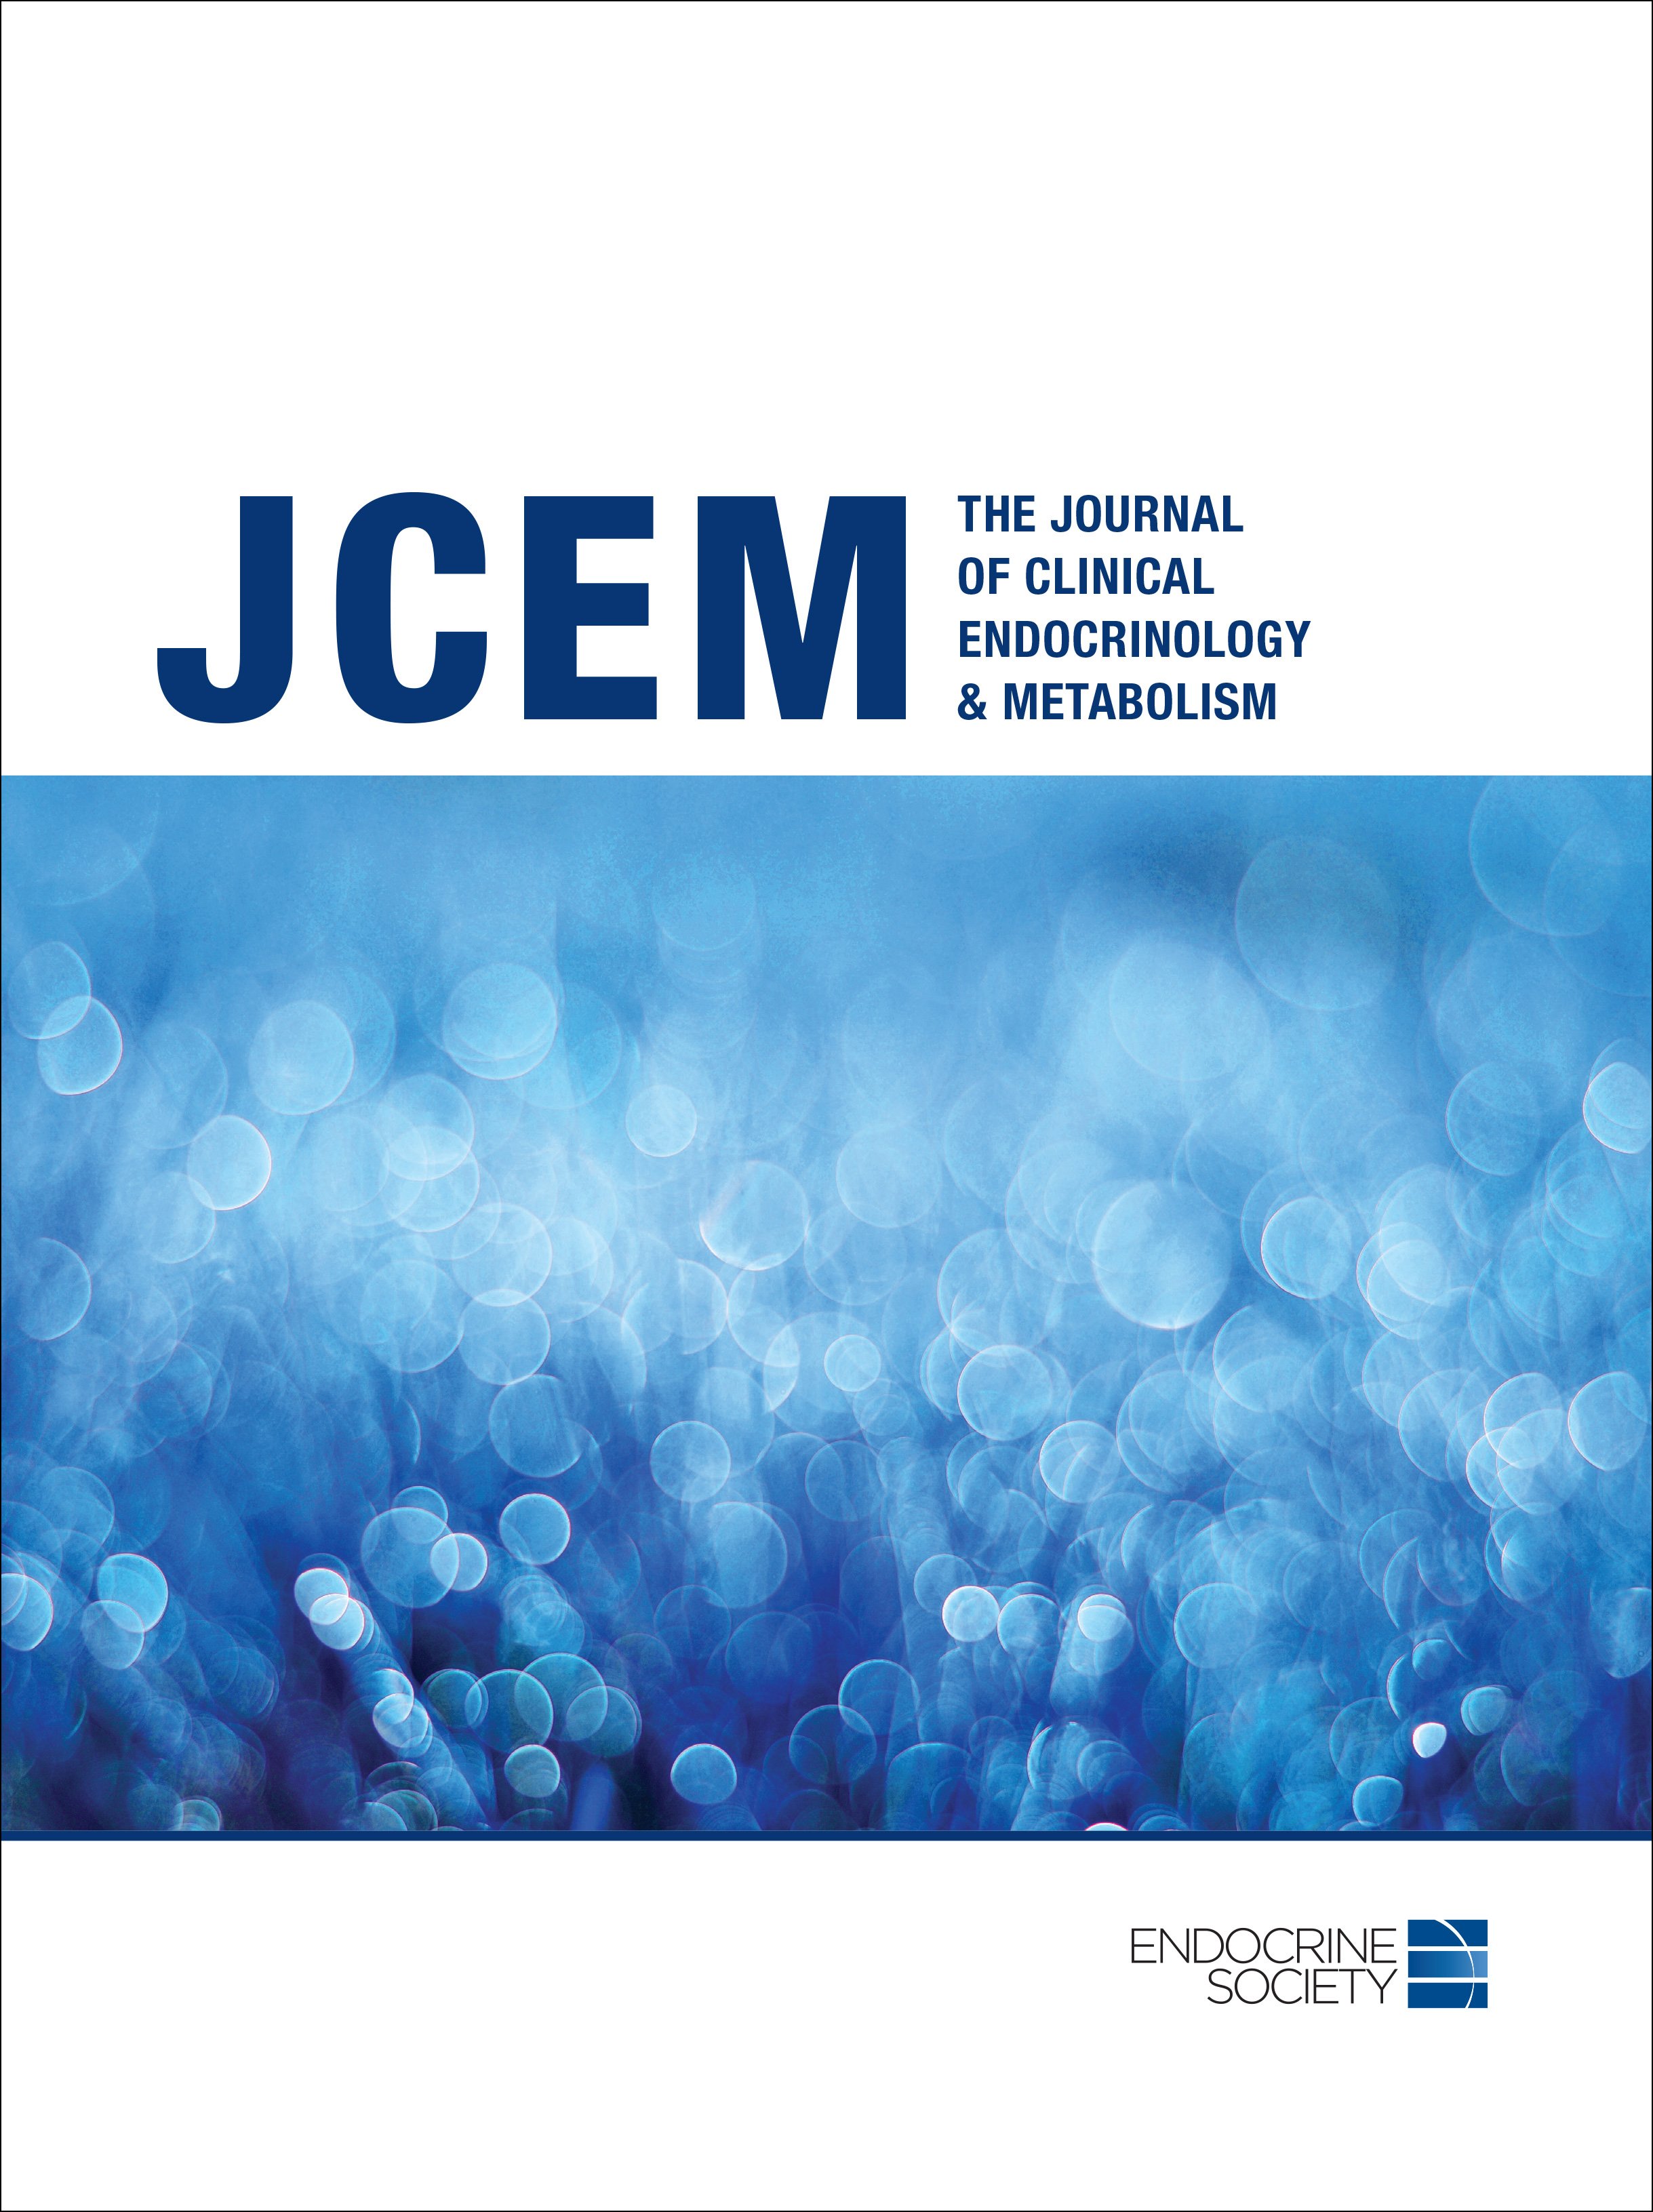 endocrinology diabetes and metabolism journal (edmj)